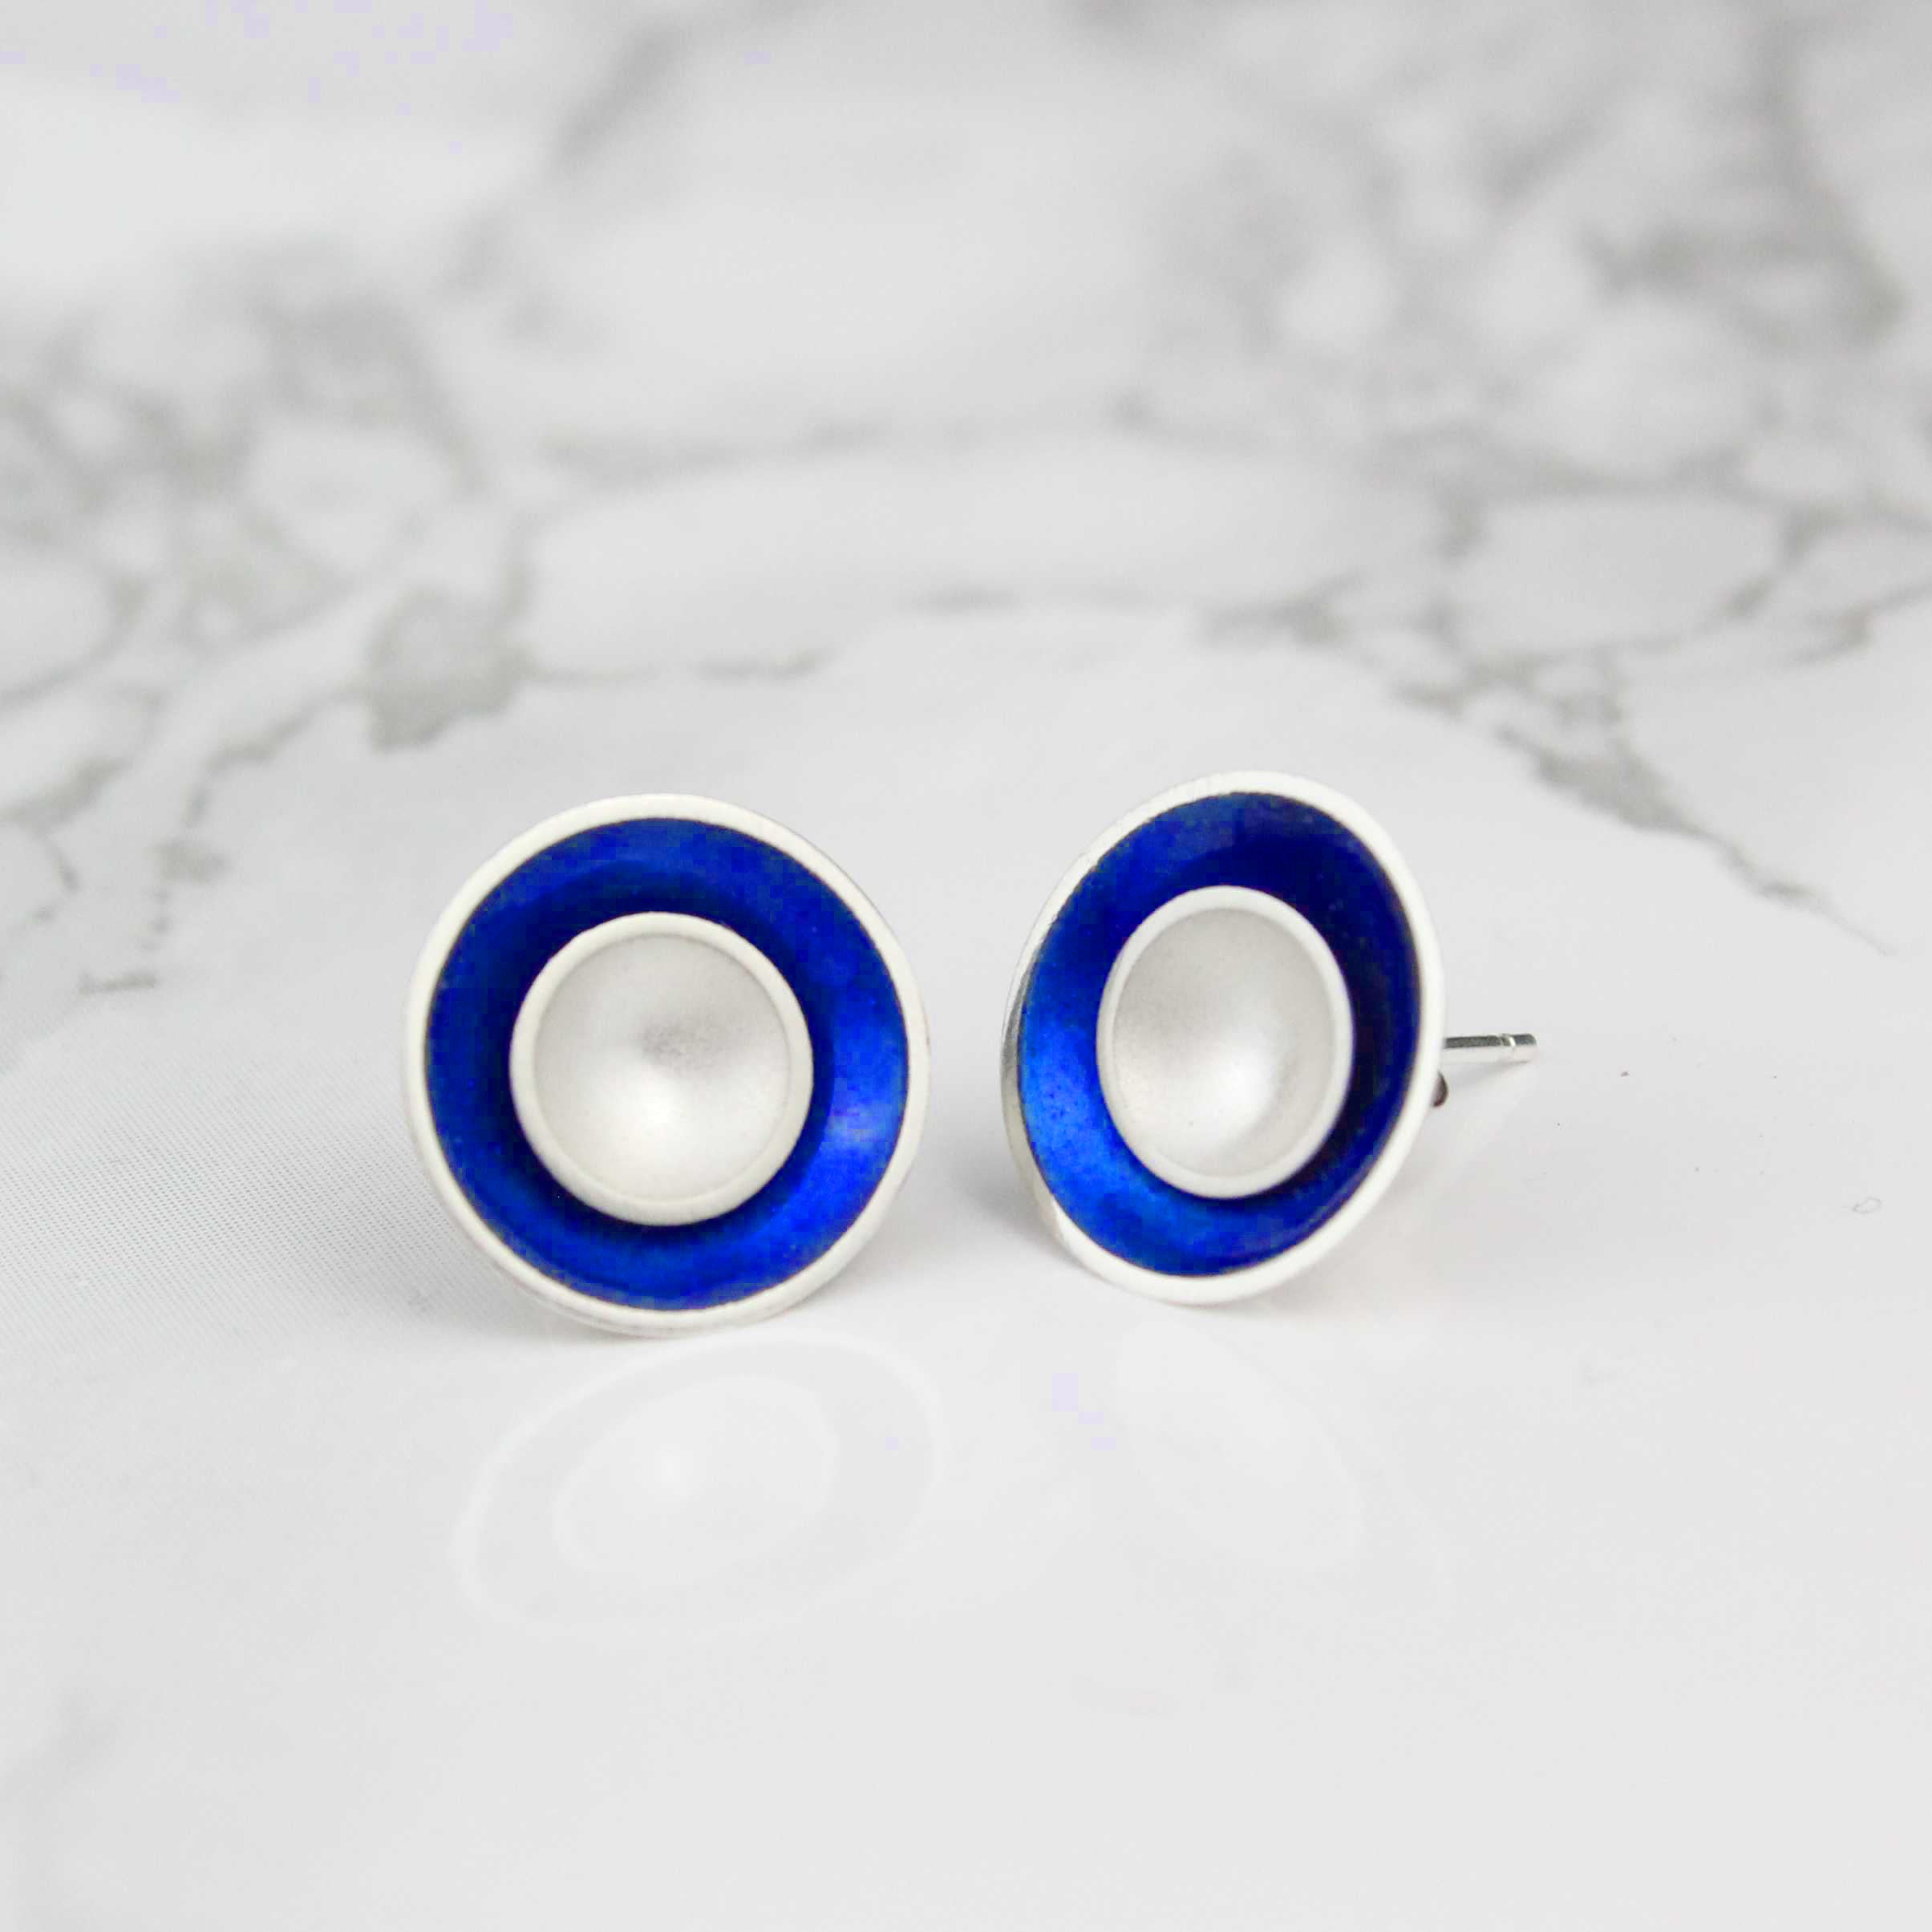 Halo Two-in-One Silver and Enamel Stud Earrings